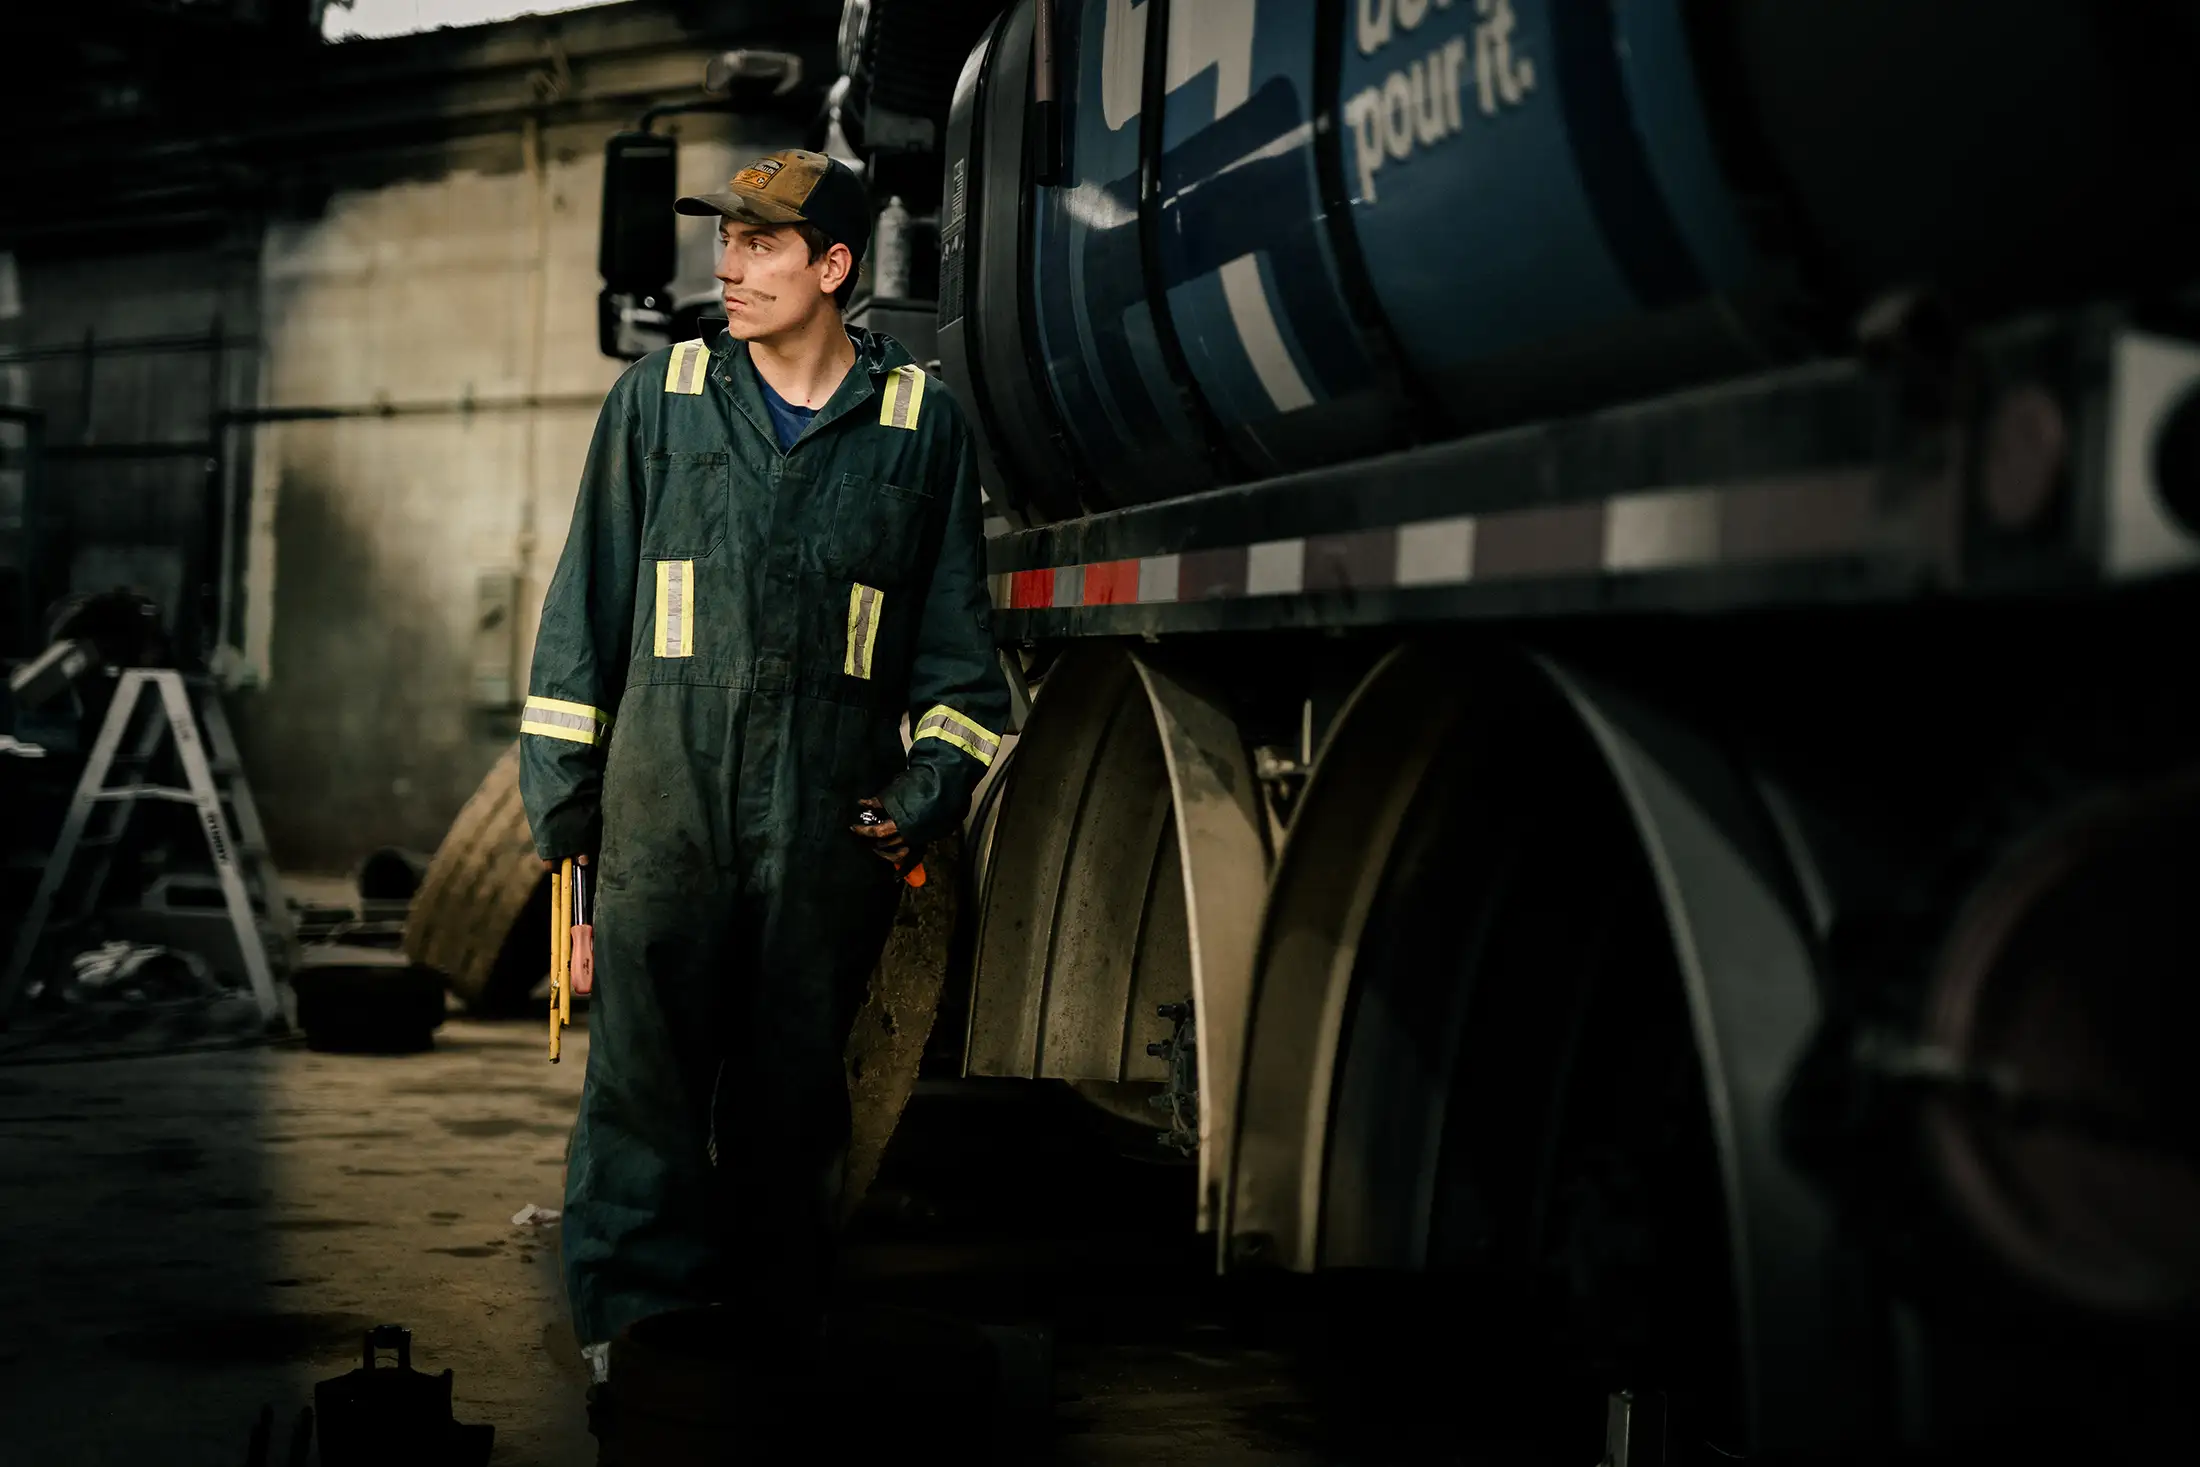 Diesel mechanic performing truck & trailer alignment services in Edmonton, Alberta